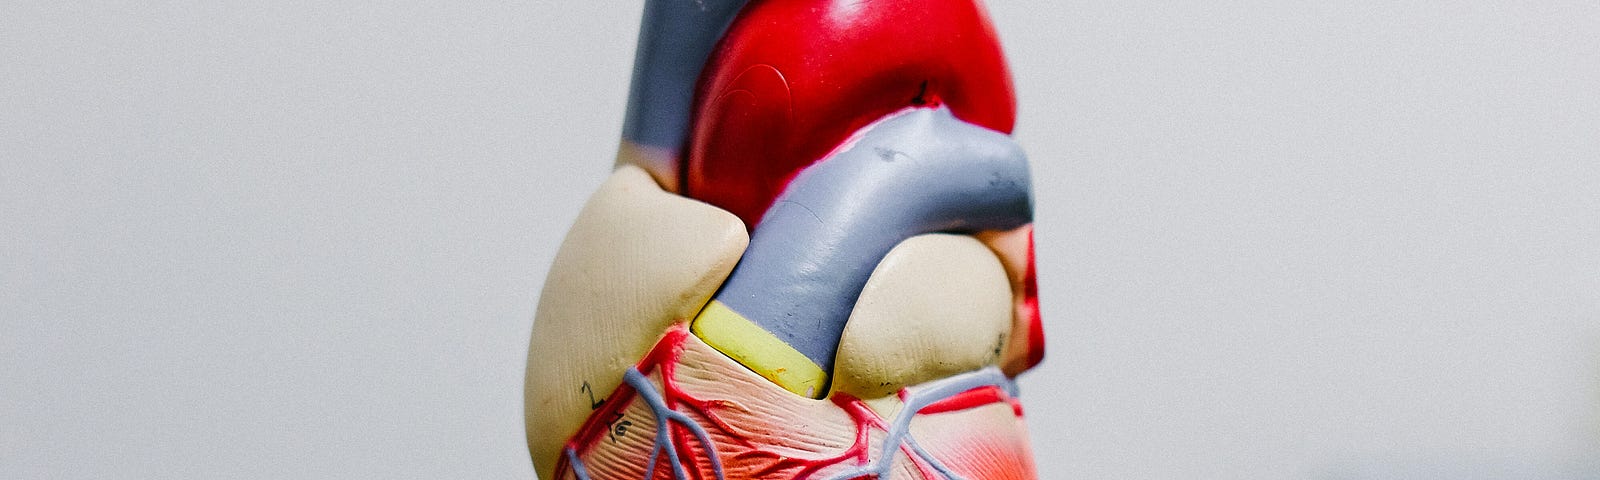 A plastic recreation of a realistic human heart.